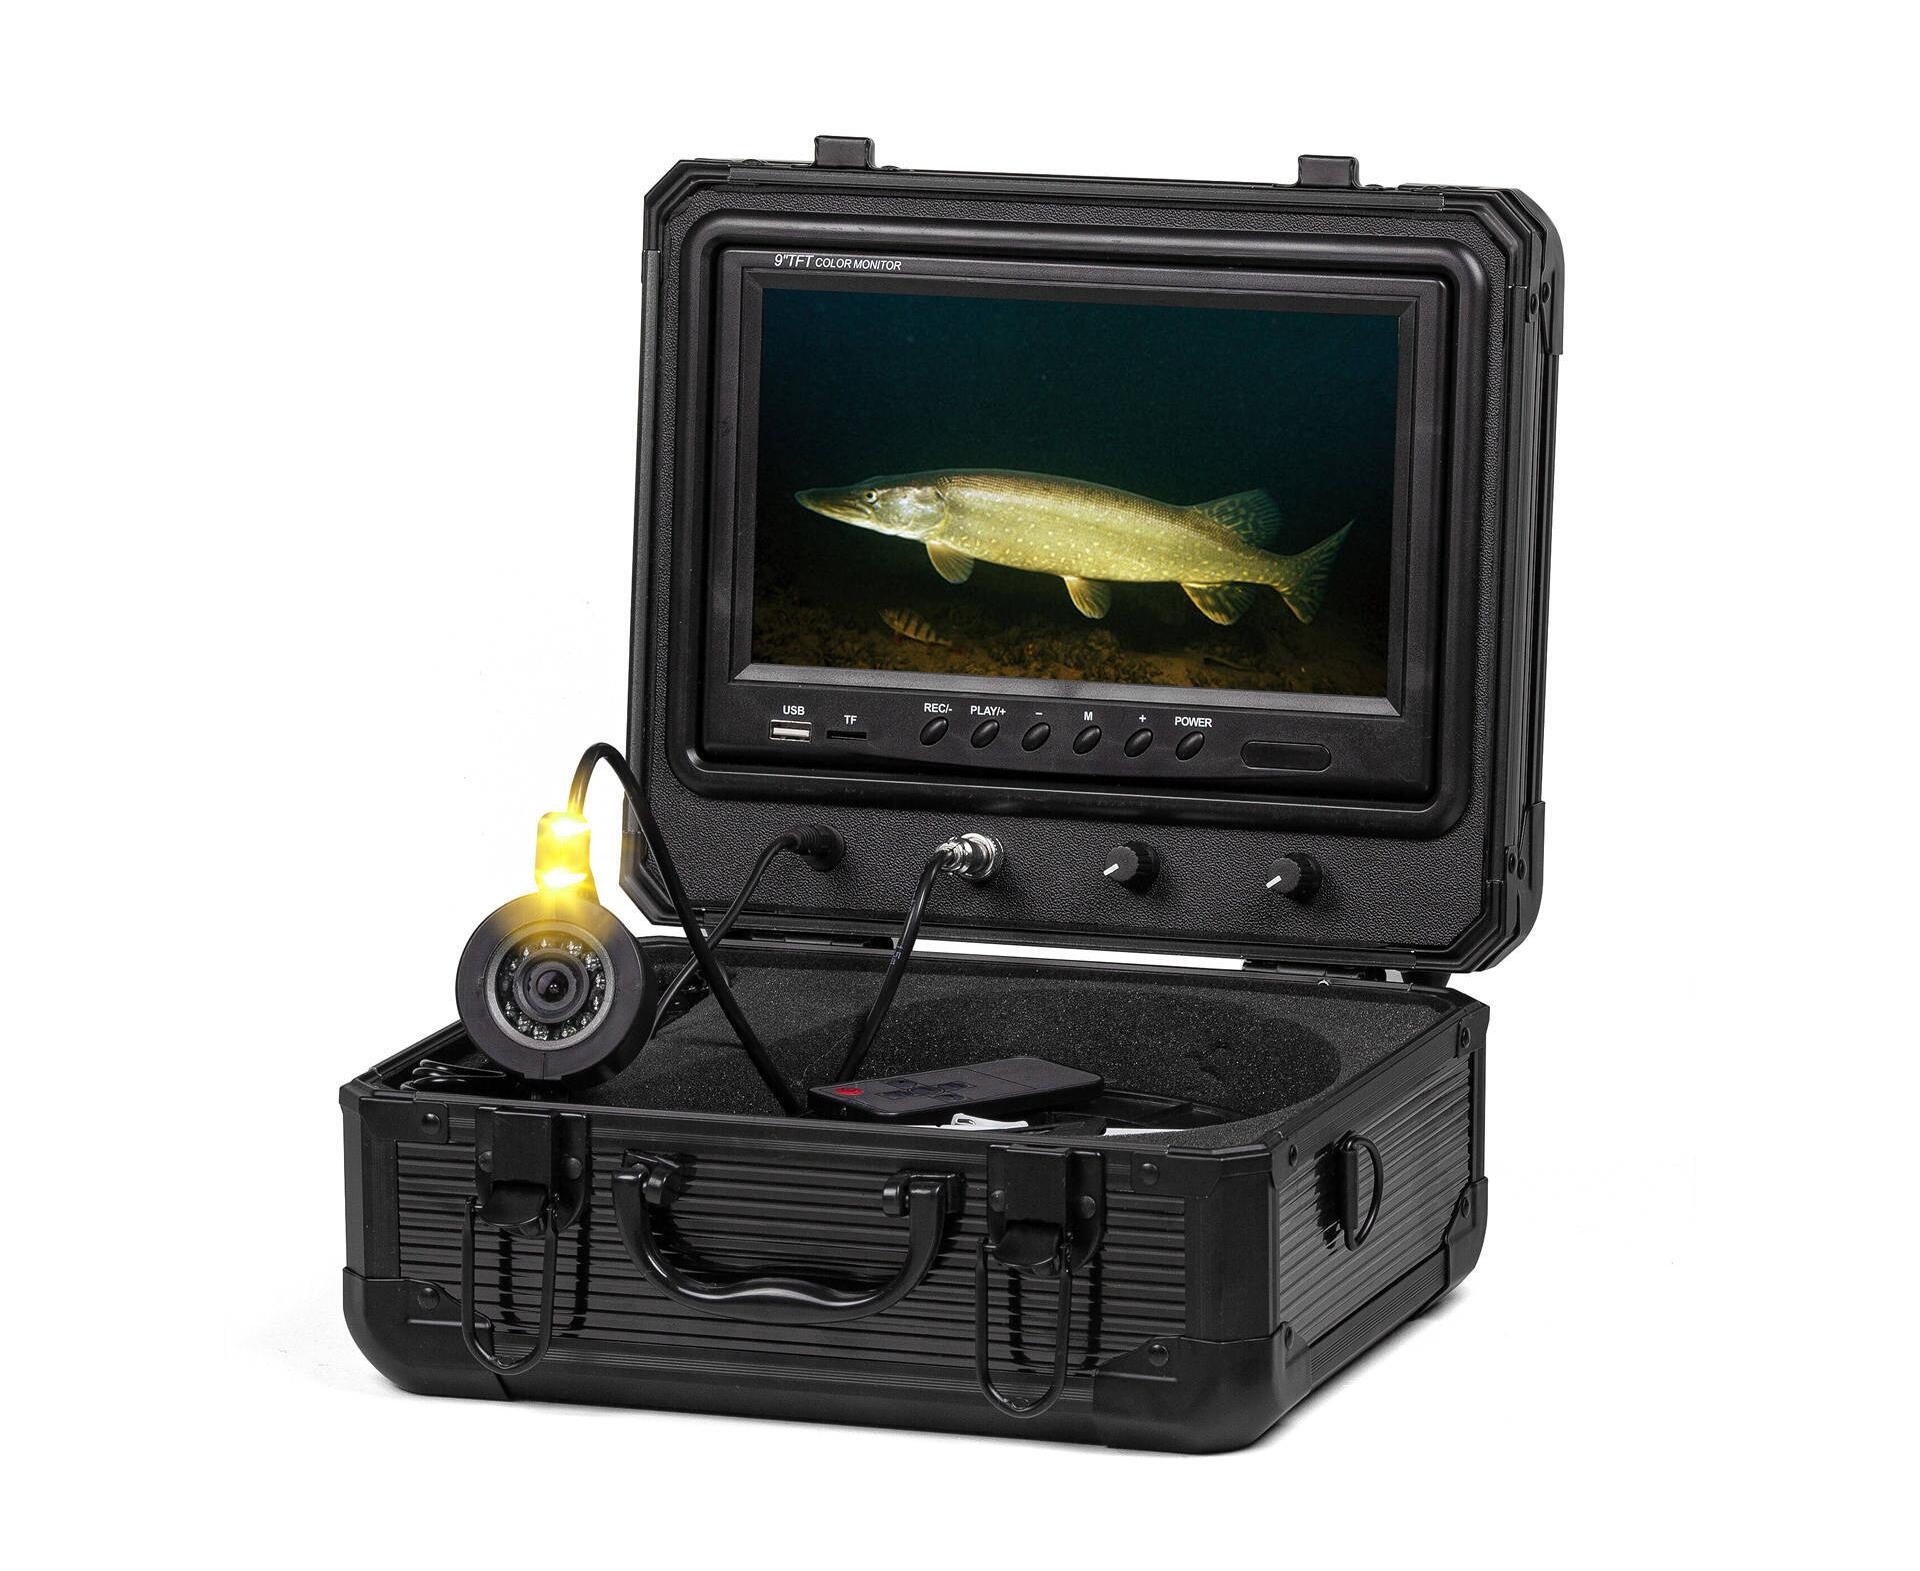 Купить камеру язь для рыбалки. Камера язь-52 компакт 9. Подводная камера Ясь 52-9. Подводная видеокамера язь52 компакт. Подводная камера язь-52 Актив 7 Pro.